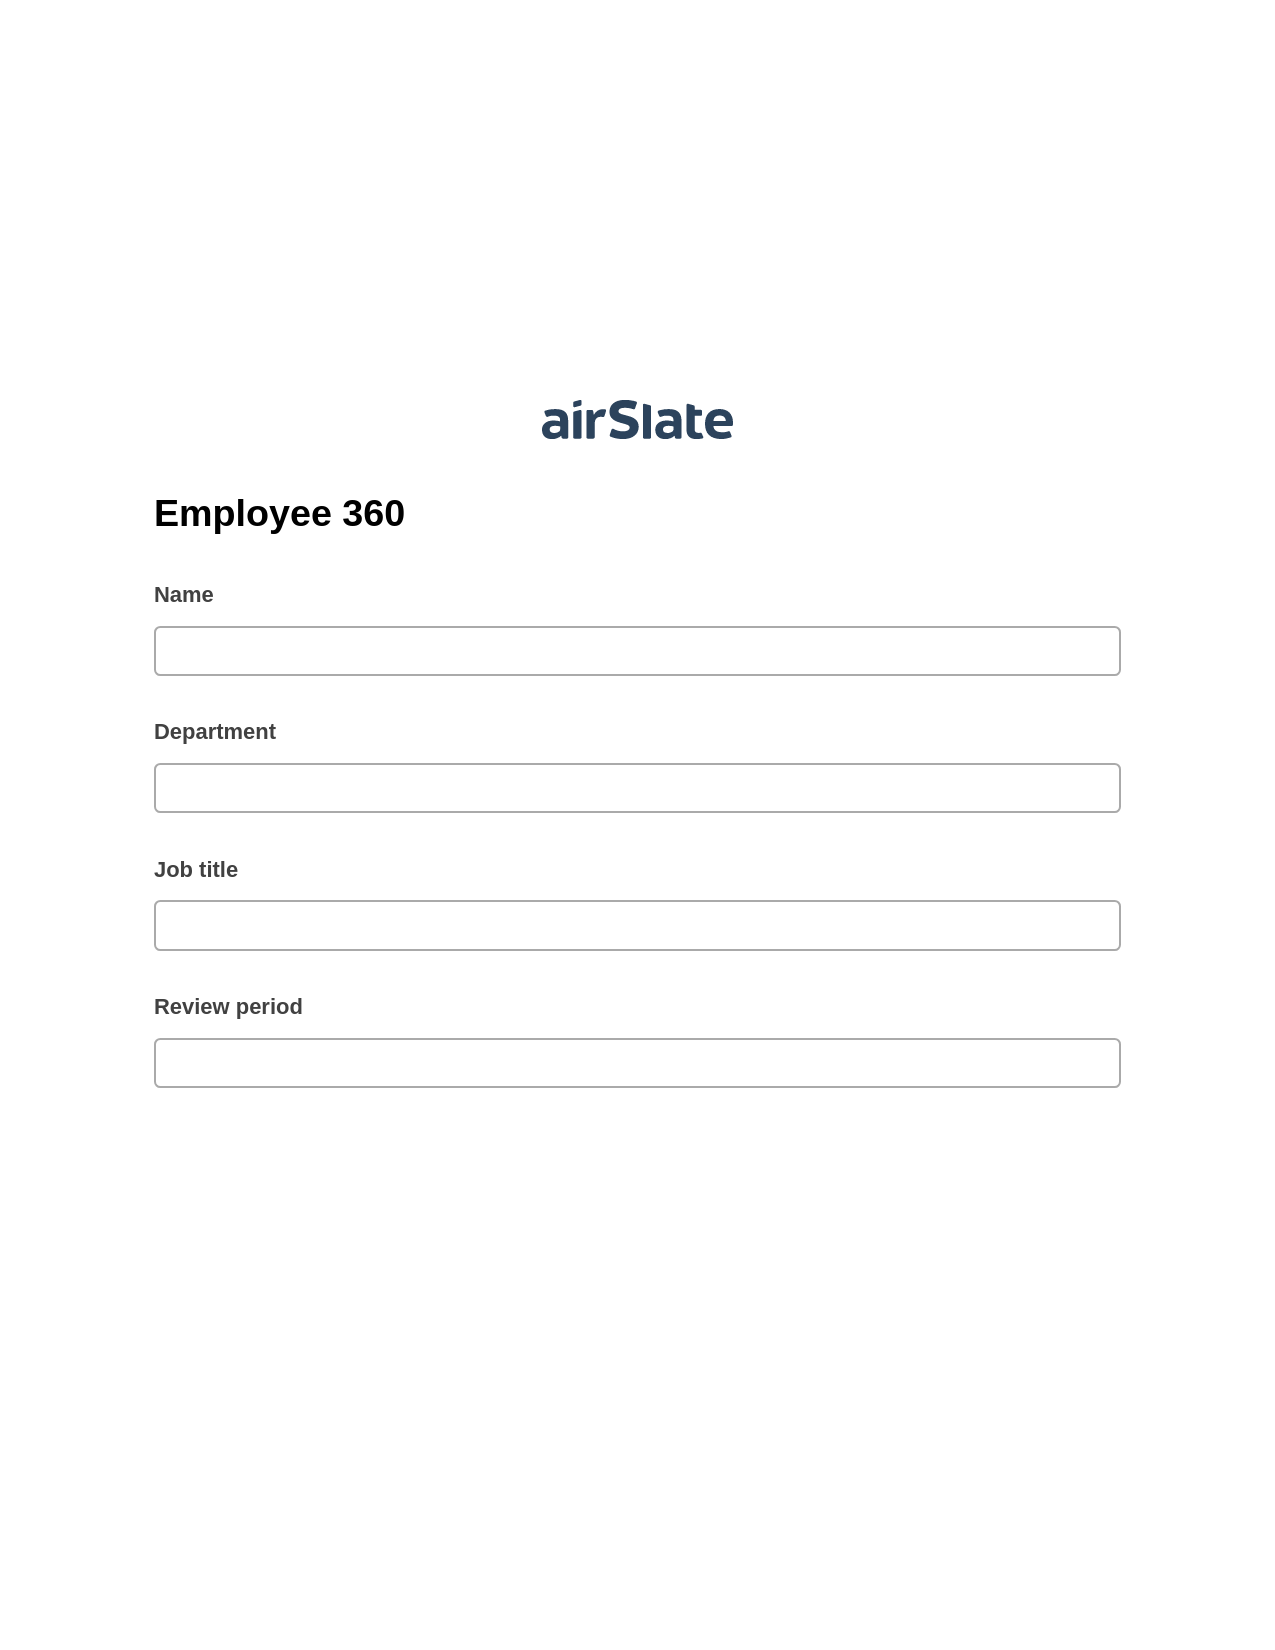 Employee 360 Pre-fill from CSV File Bot, Google Calendar Bot, Email Notification Postfinish Bot